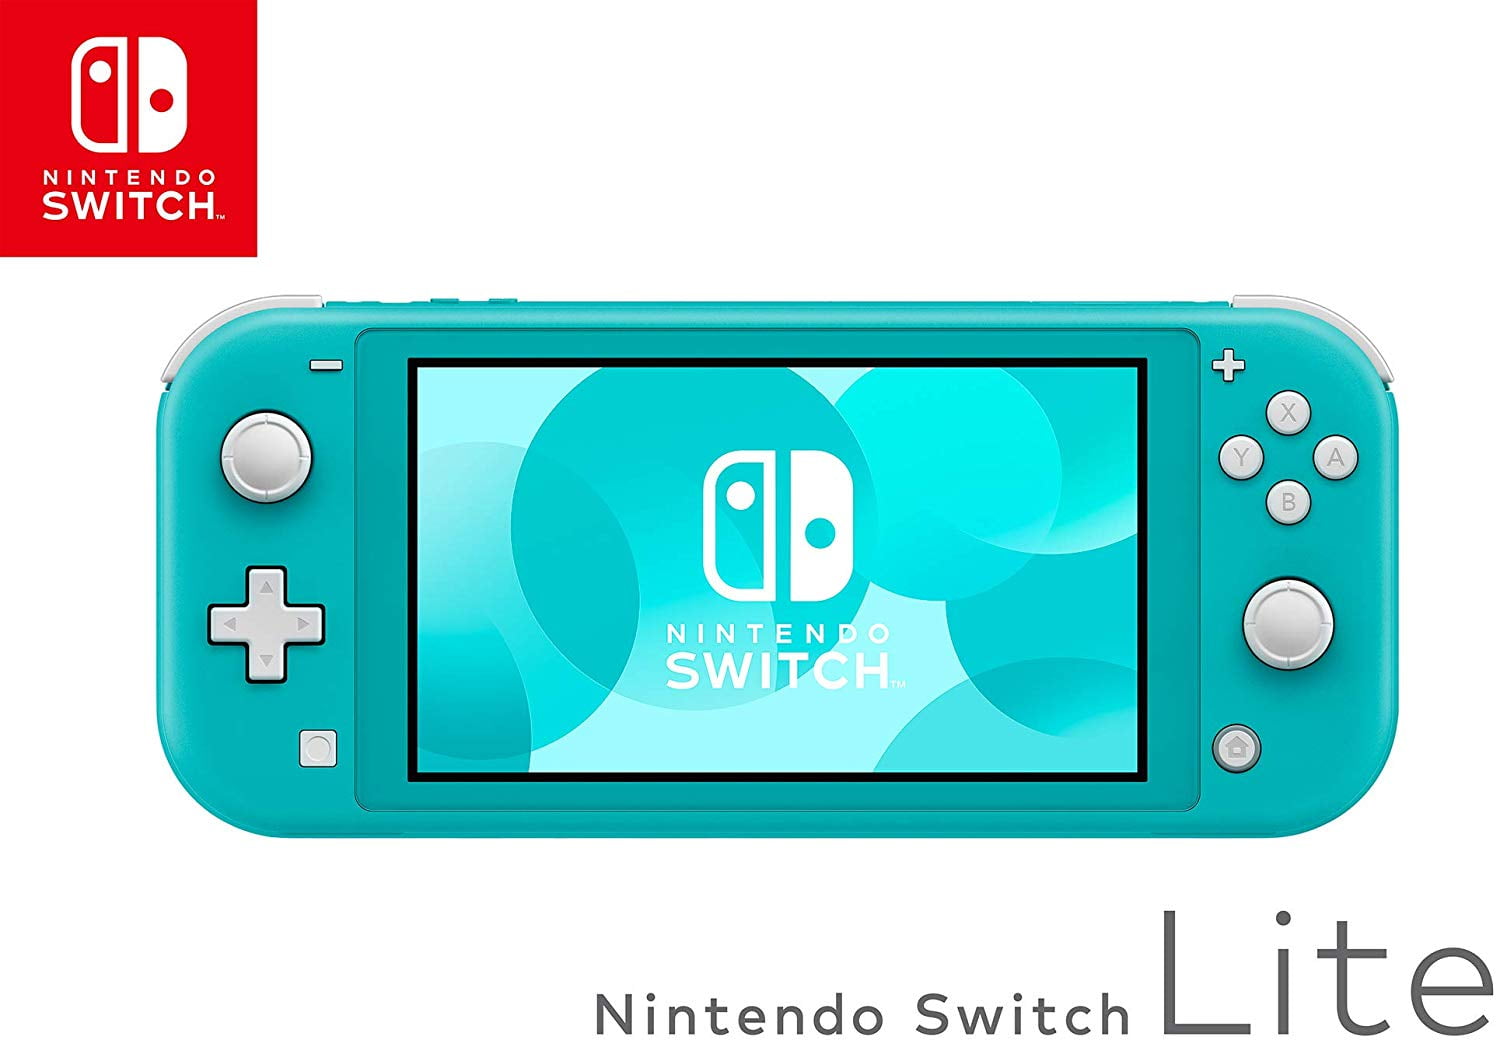 Pack Nintendo Switch Lite – Antilles sur Tarn